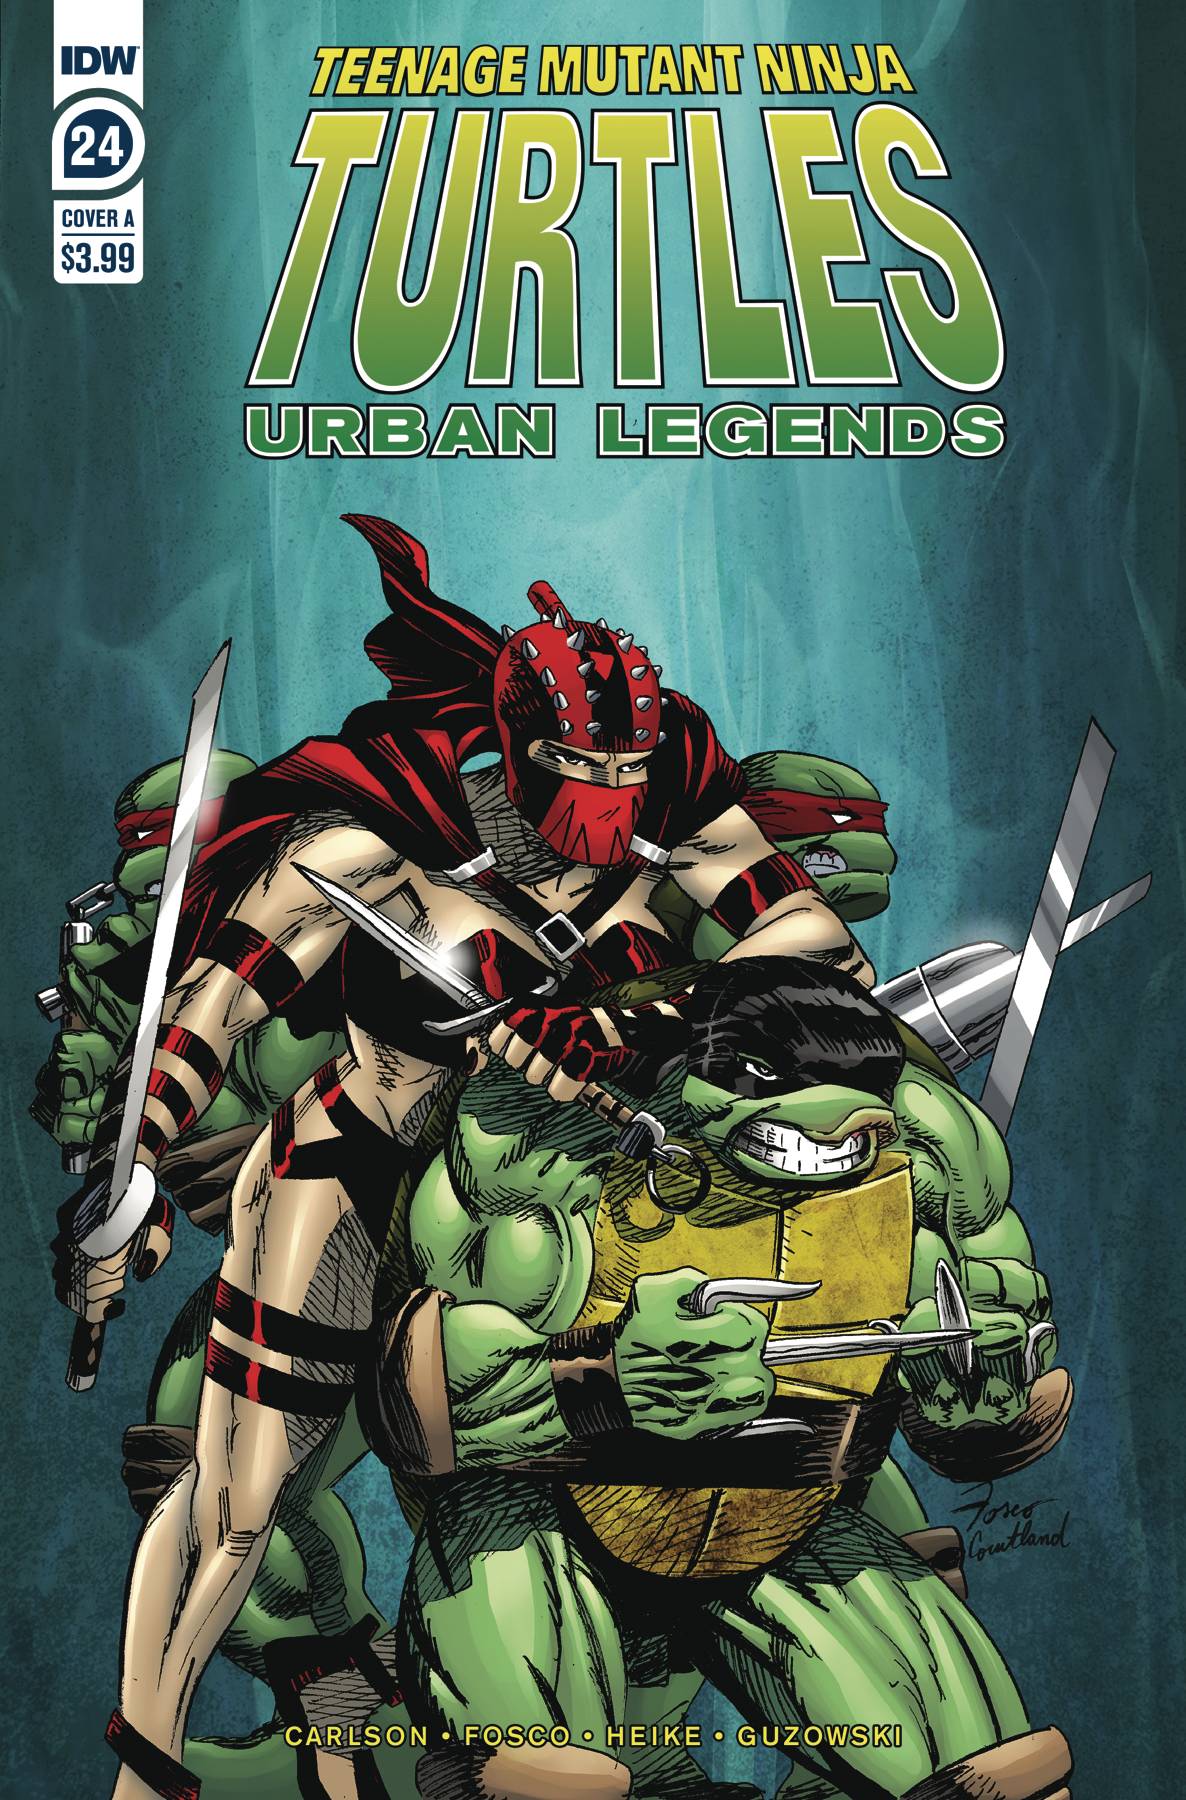 Teenage Mutant Ninja Turtles Urban Legends #24 Cover A Fosco